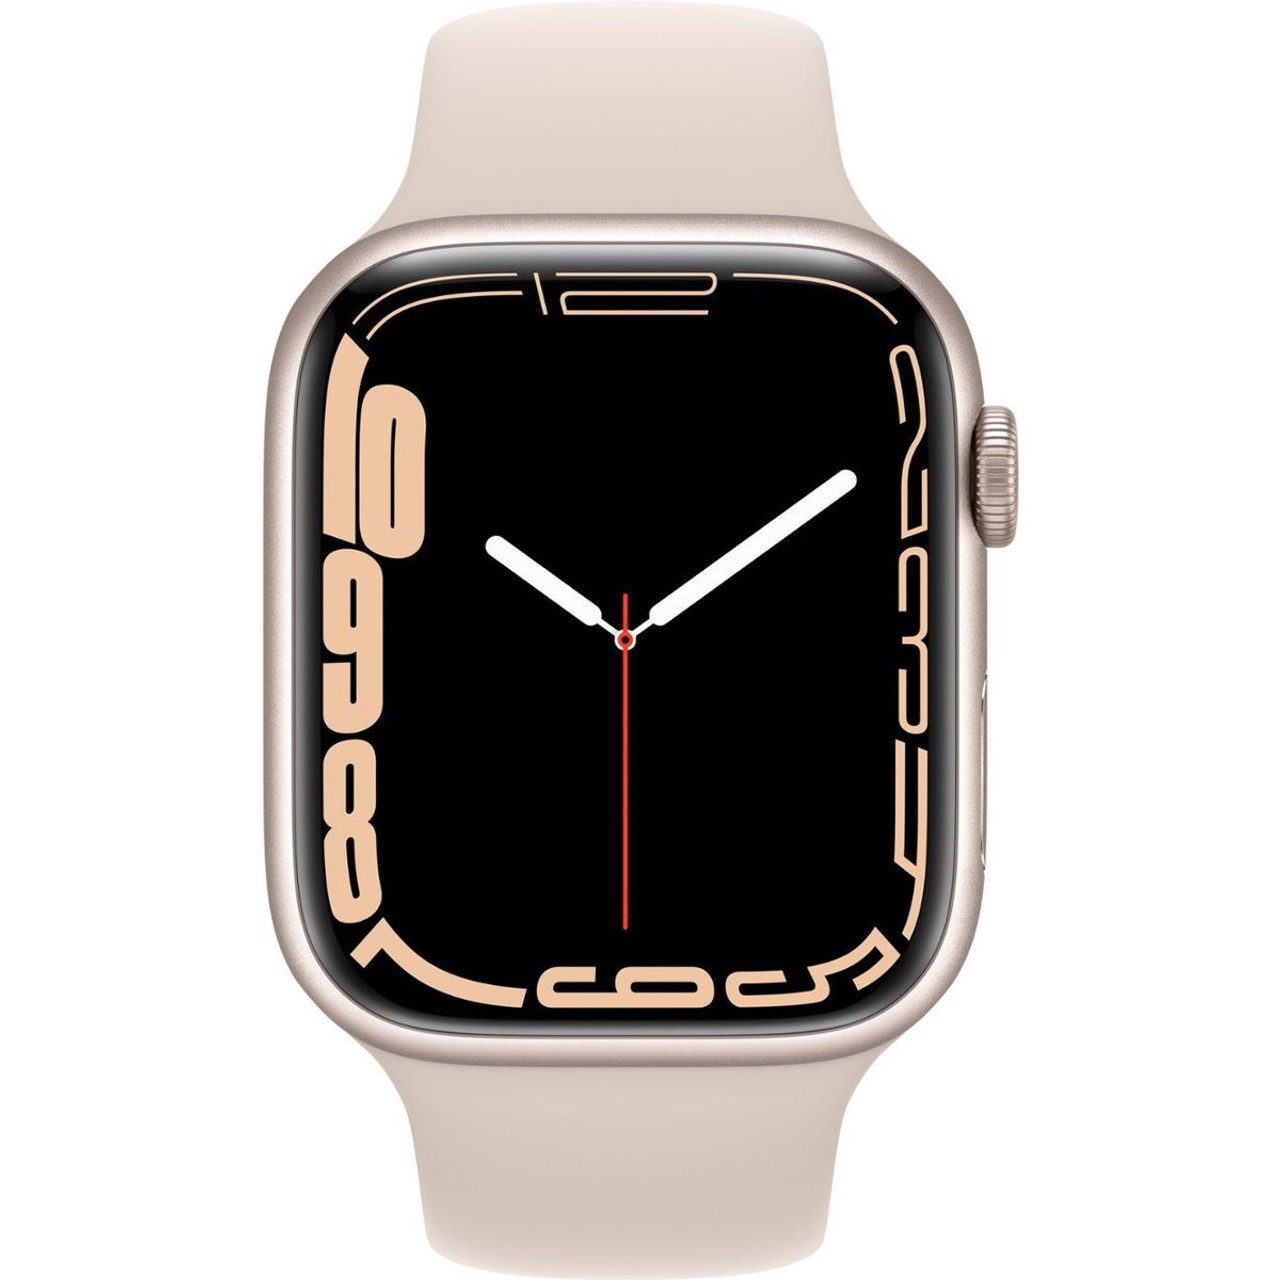 Apple Watch (Series 7) Starlight Aluminum Case product image